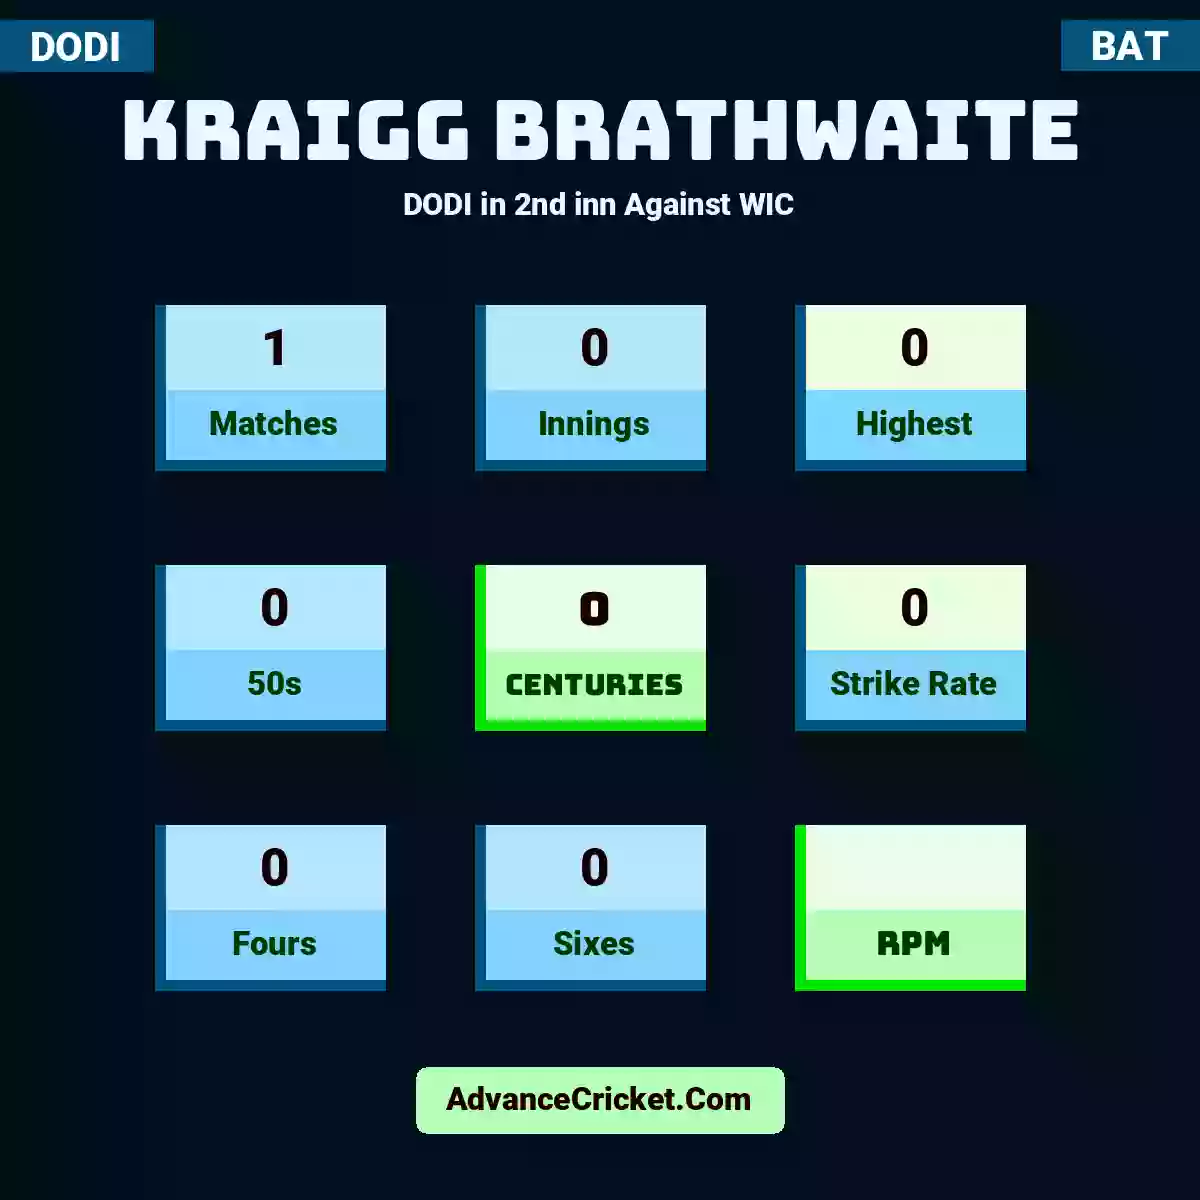 Kraigg Brathwaite DODI  in 2nd inn Against WIC, Kraigg Brathwaite played 1 matches, scored 0 runs as highest, 0 half-centuries, and 0 centuries, with a strike rate of 0. K.Brathwaite hit 0 fours and 0 sixes.